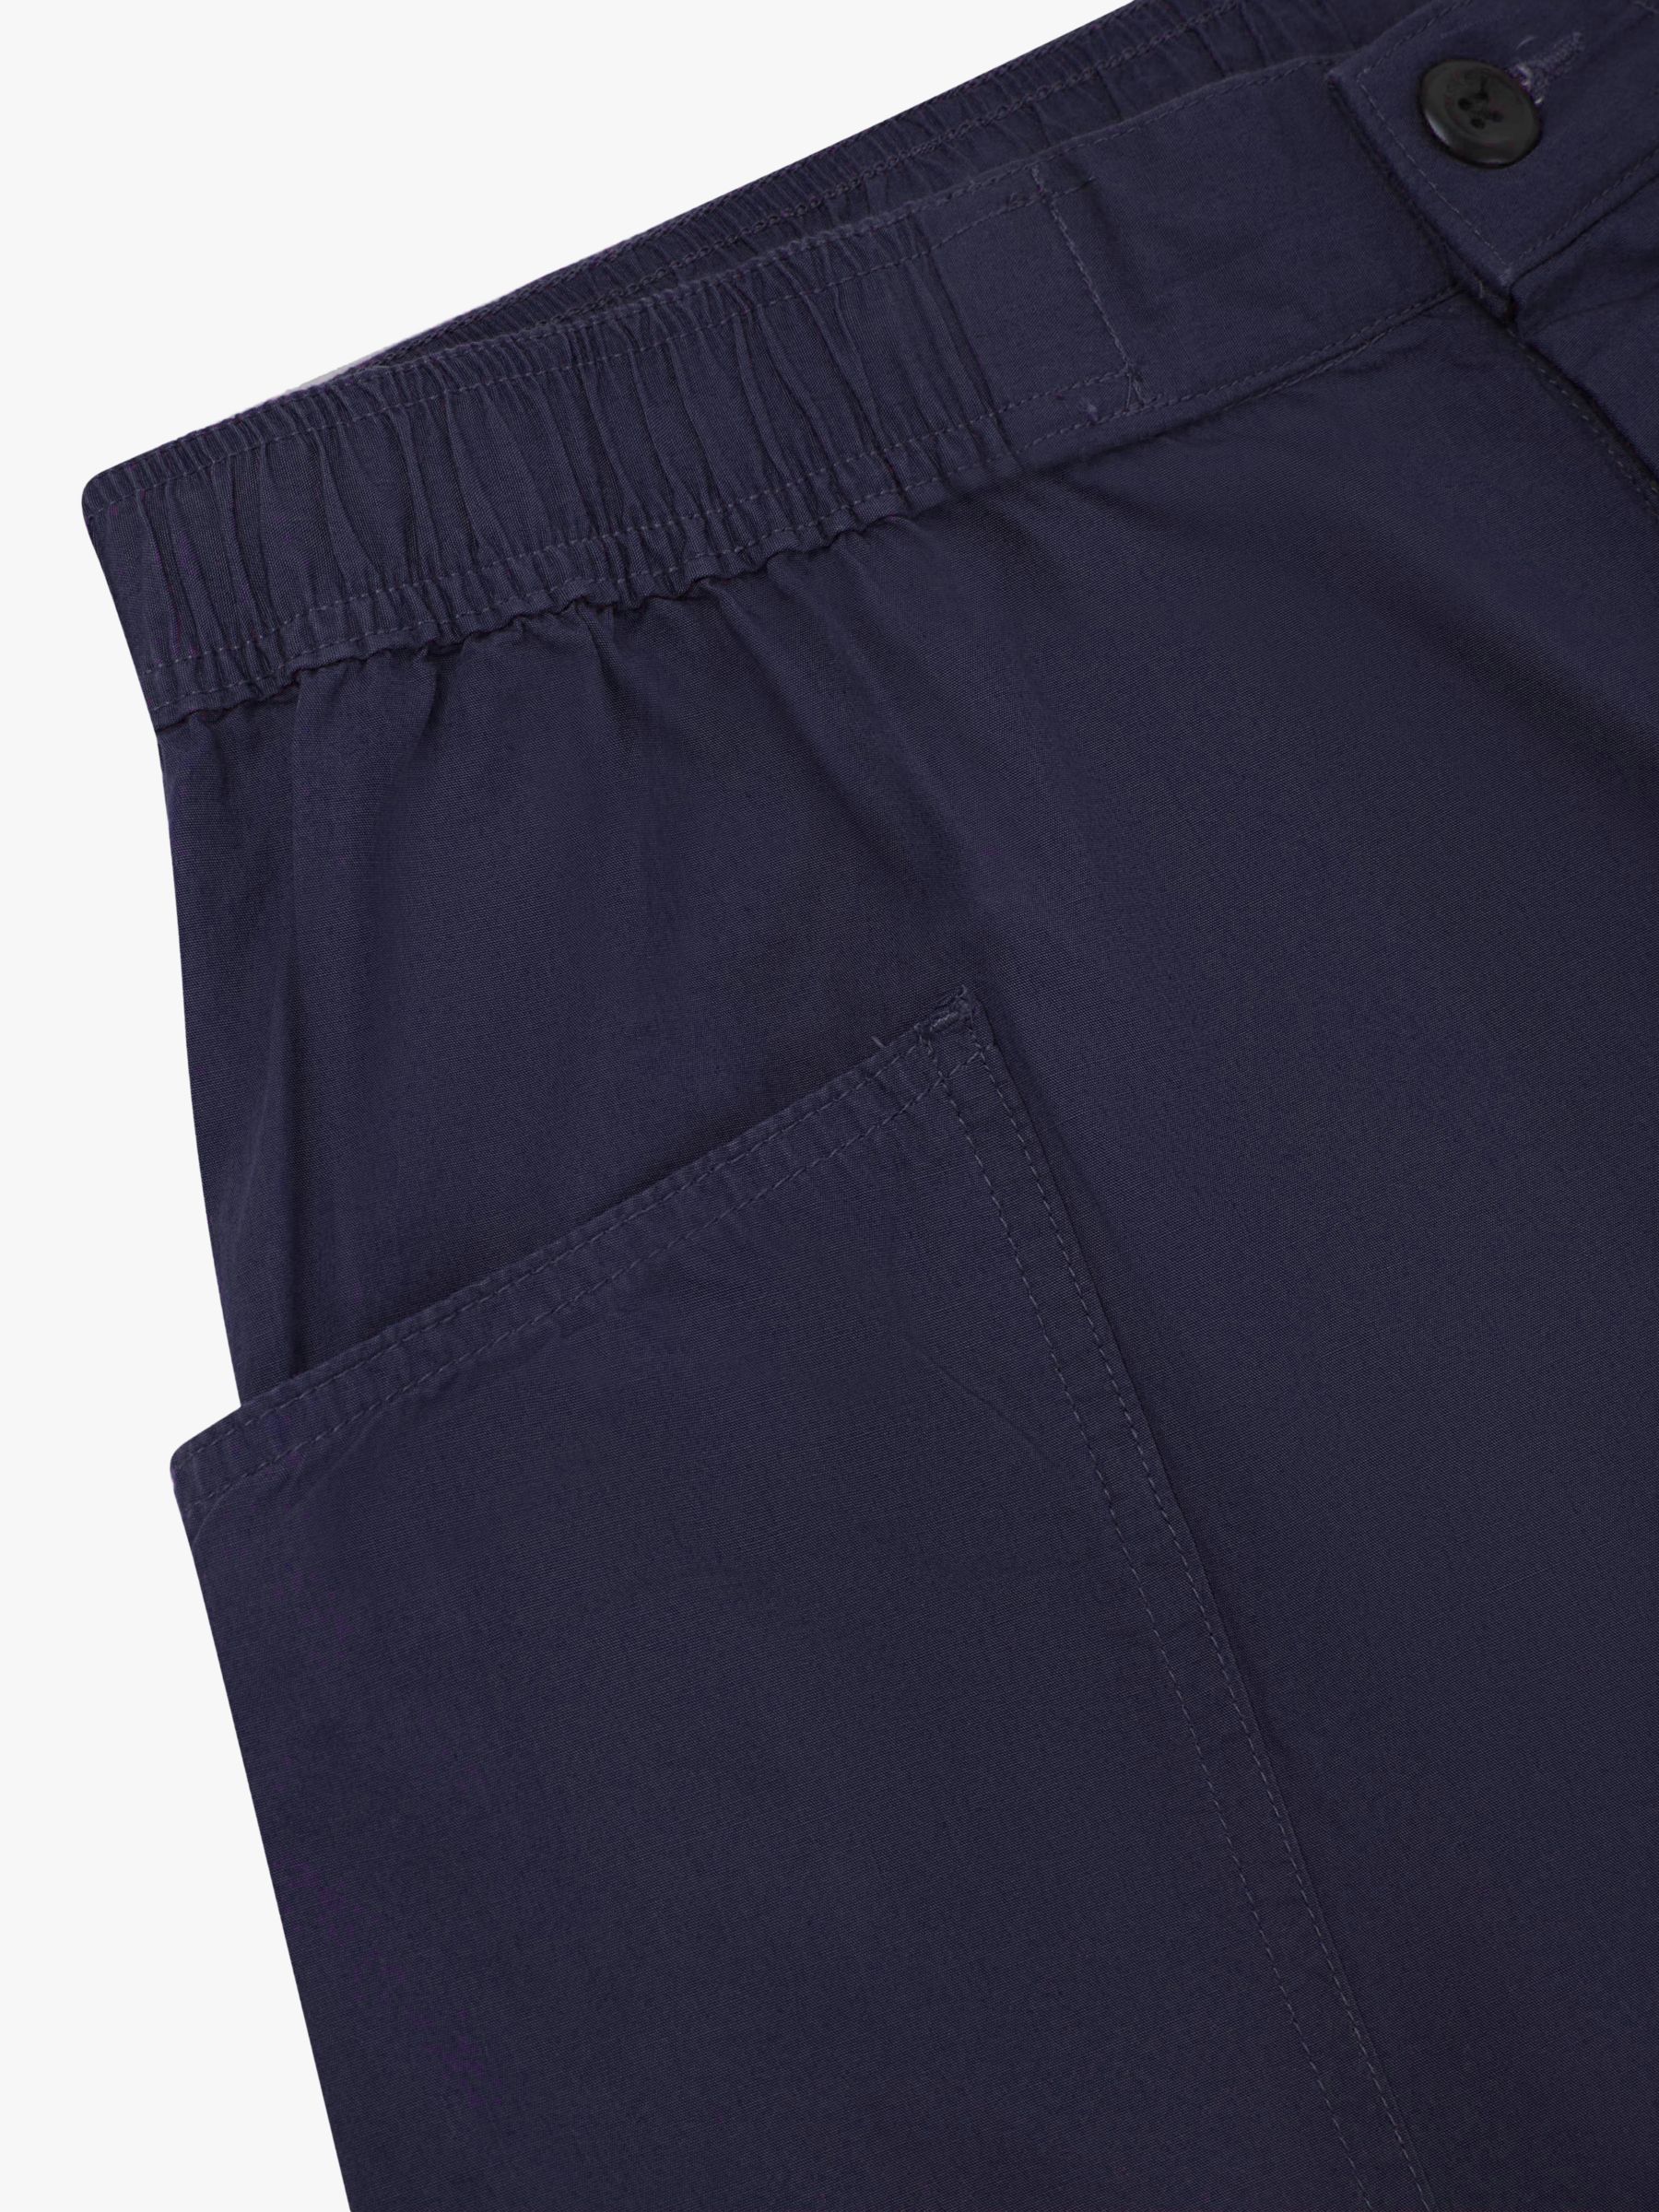 Uskees 5015 Lightweight Shorts, Midnight Blue, M